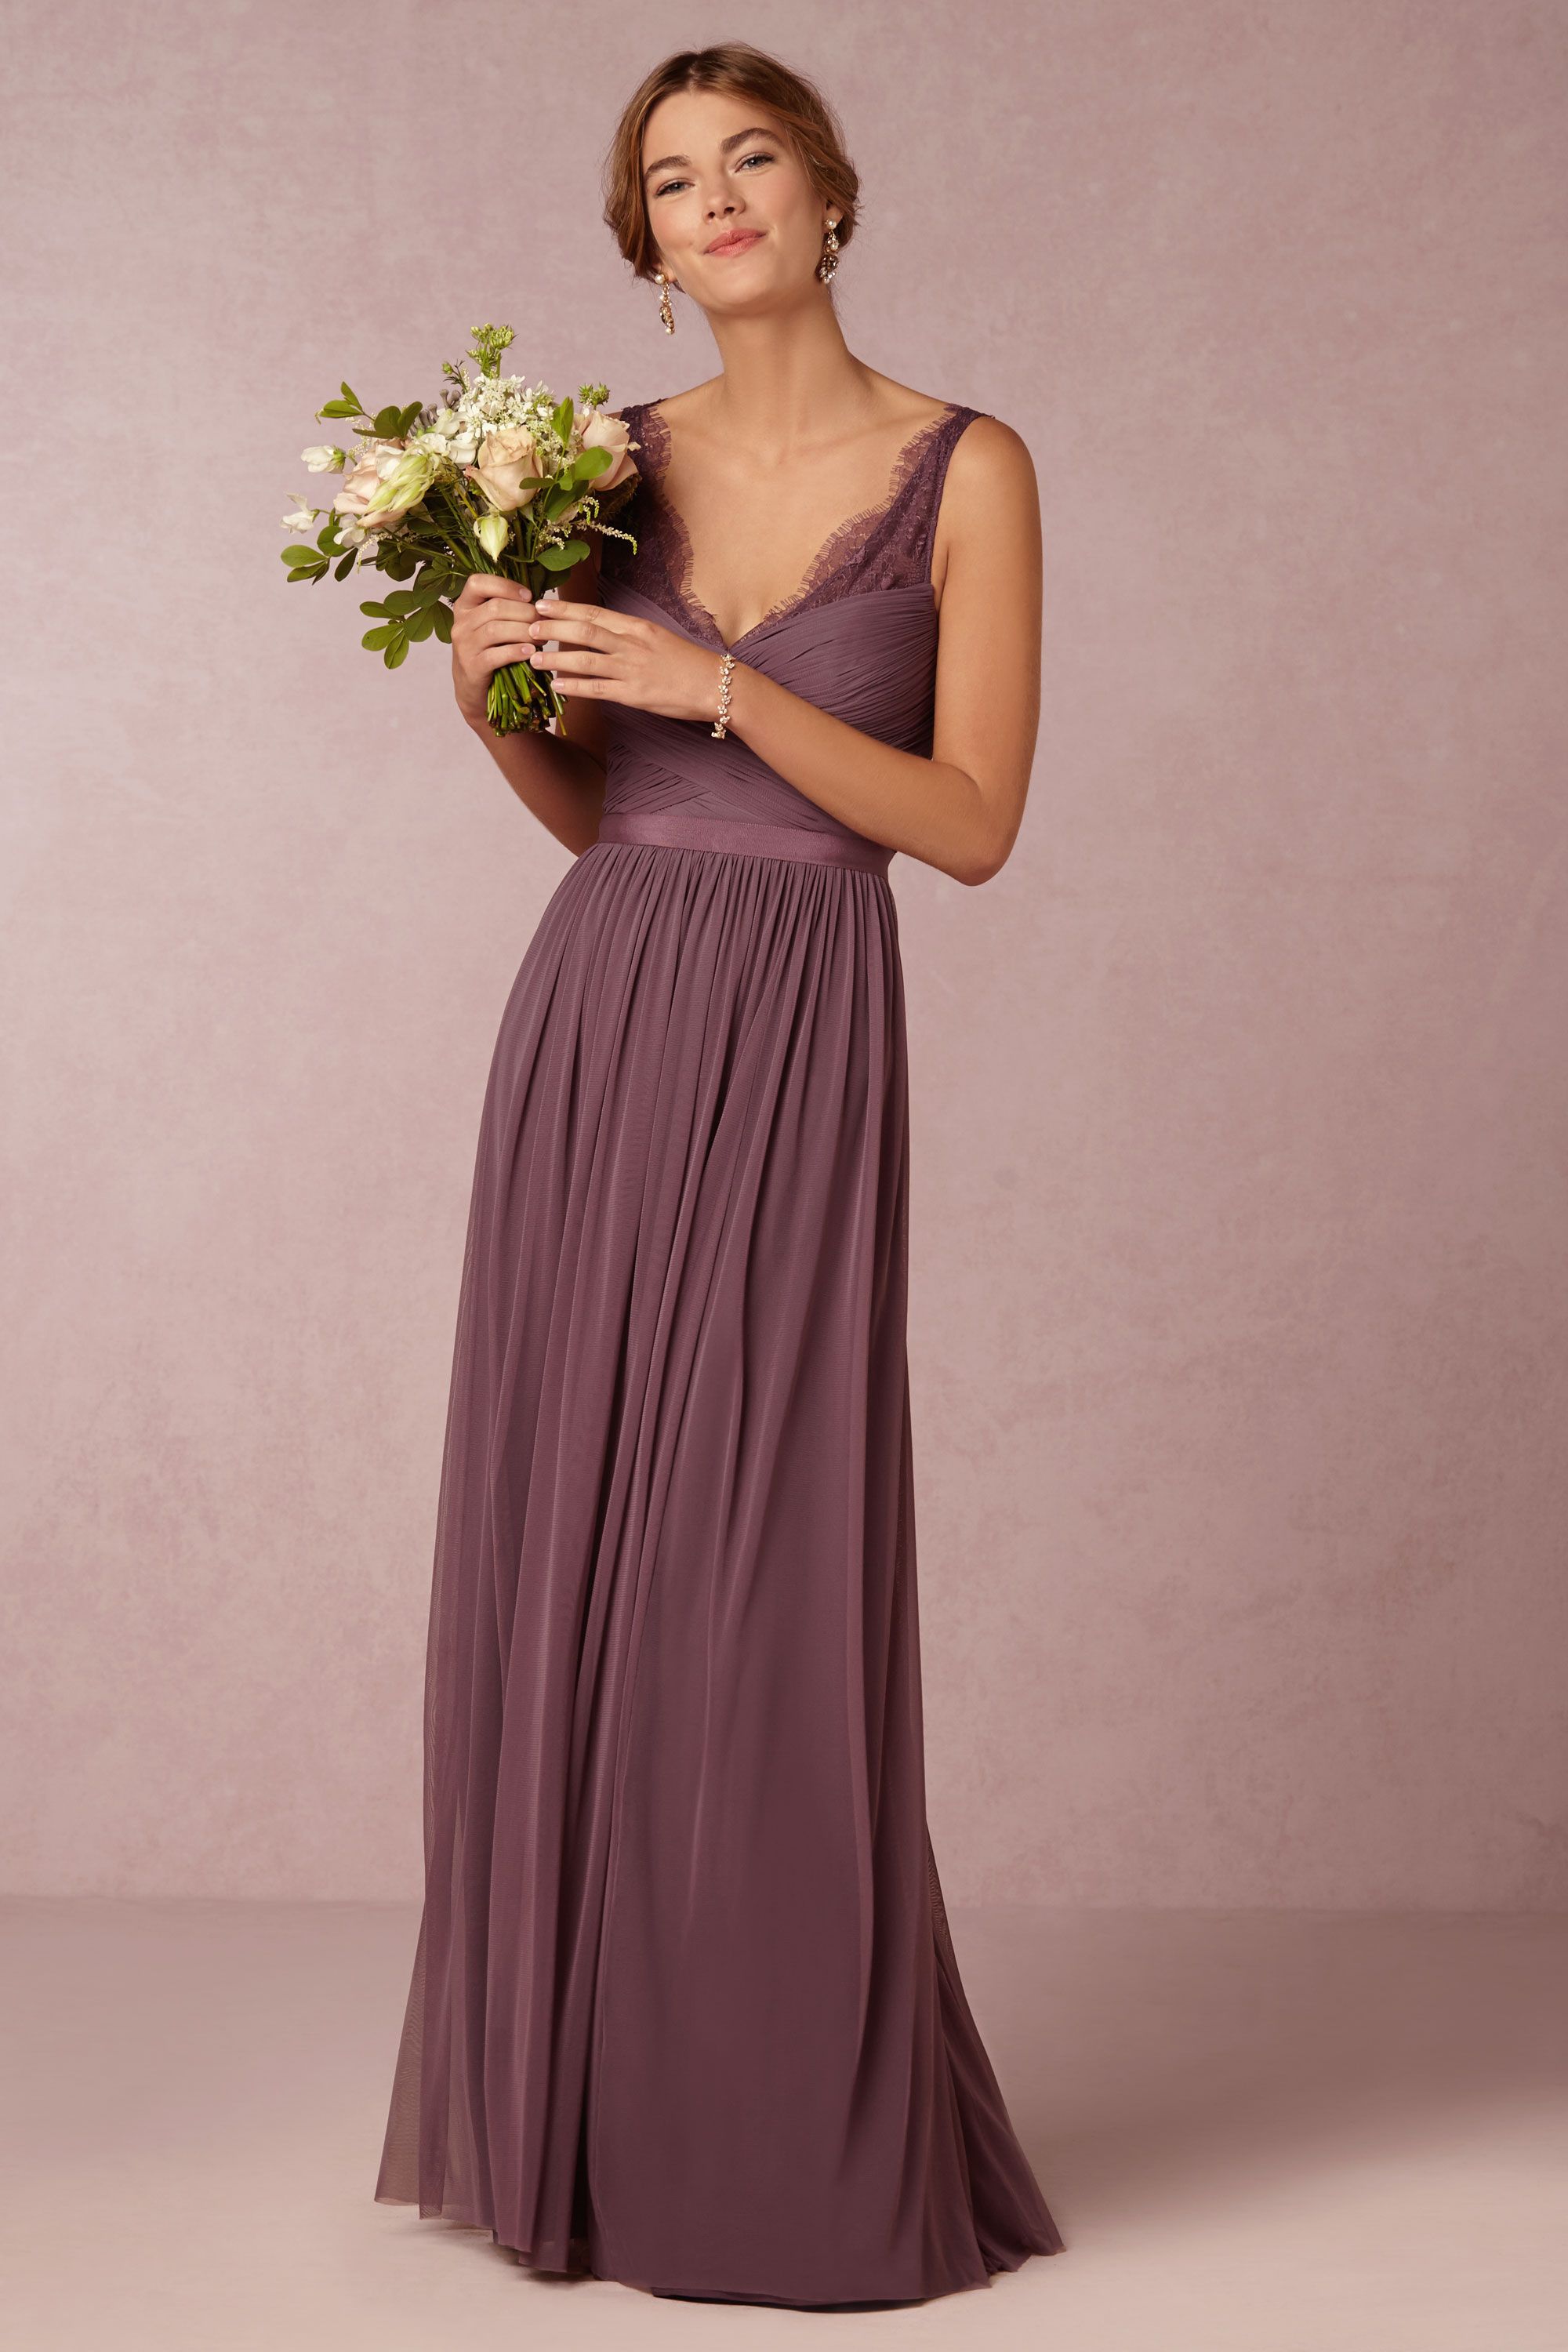 Fleur Dress in Sale | BHLDN